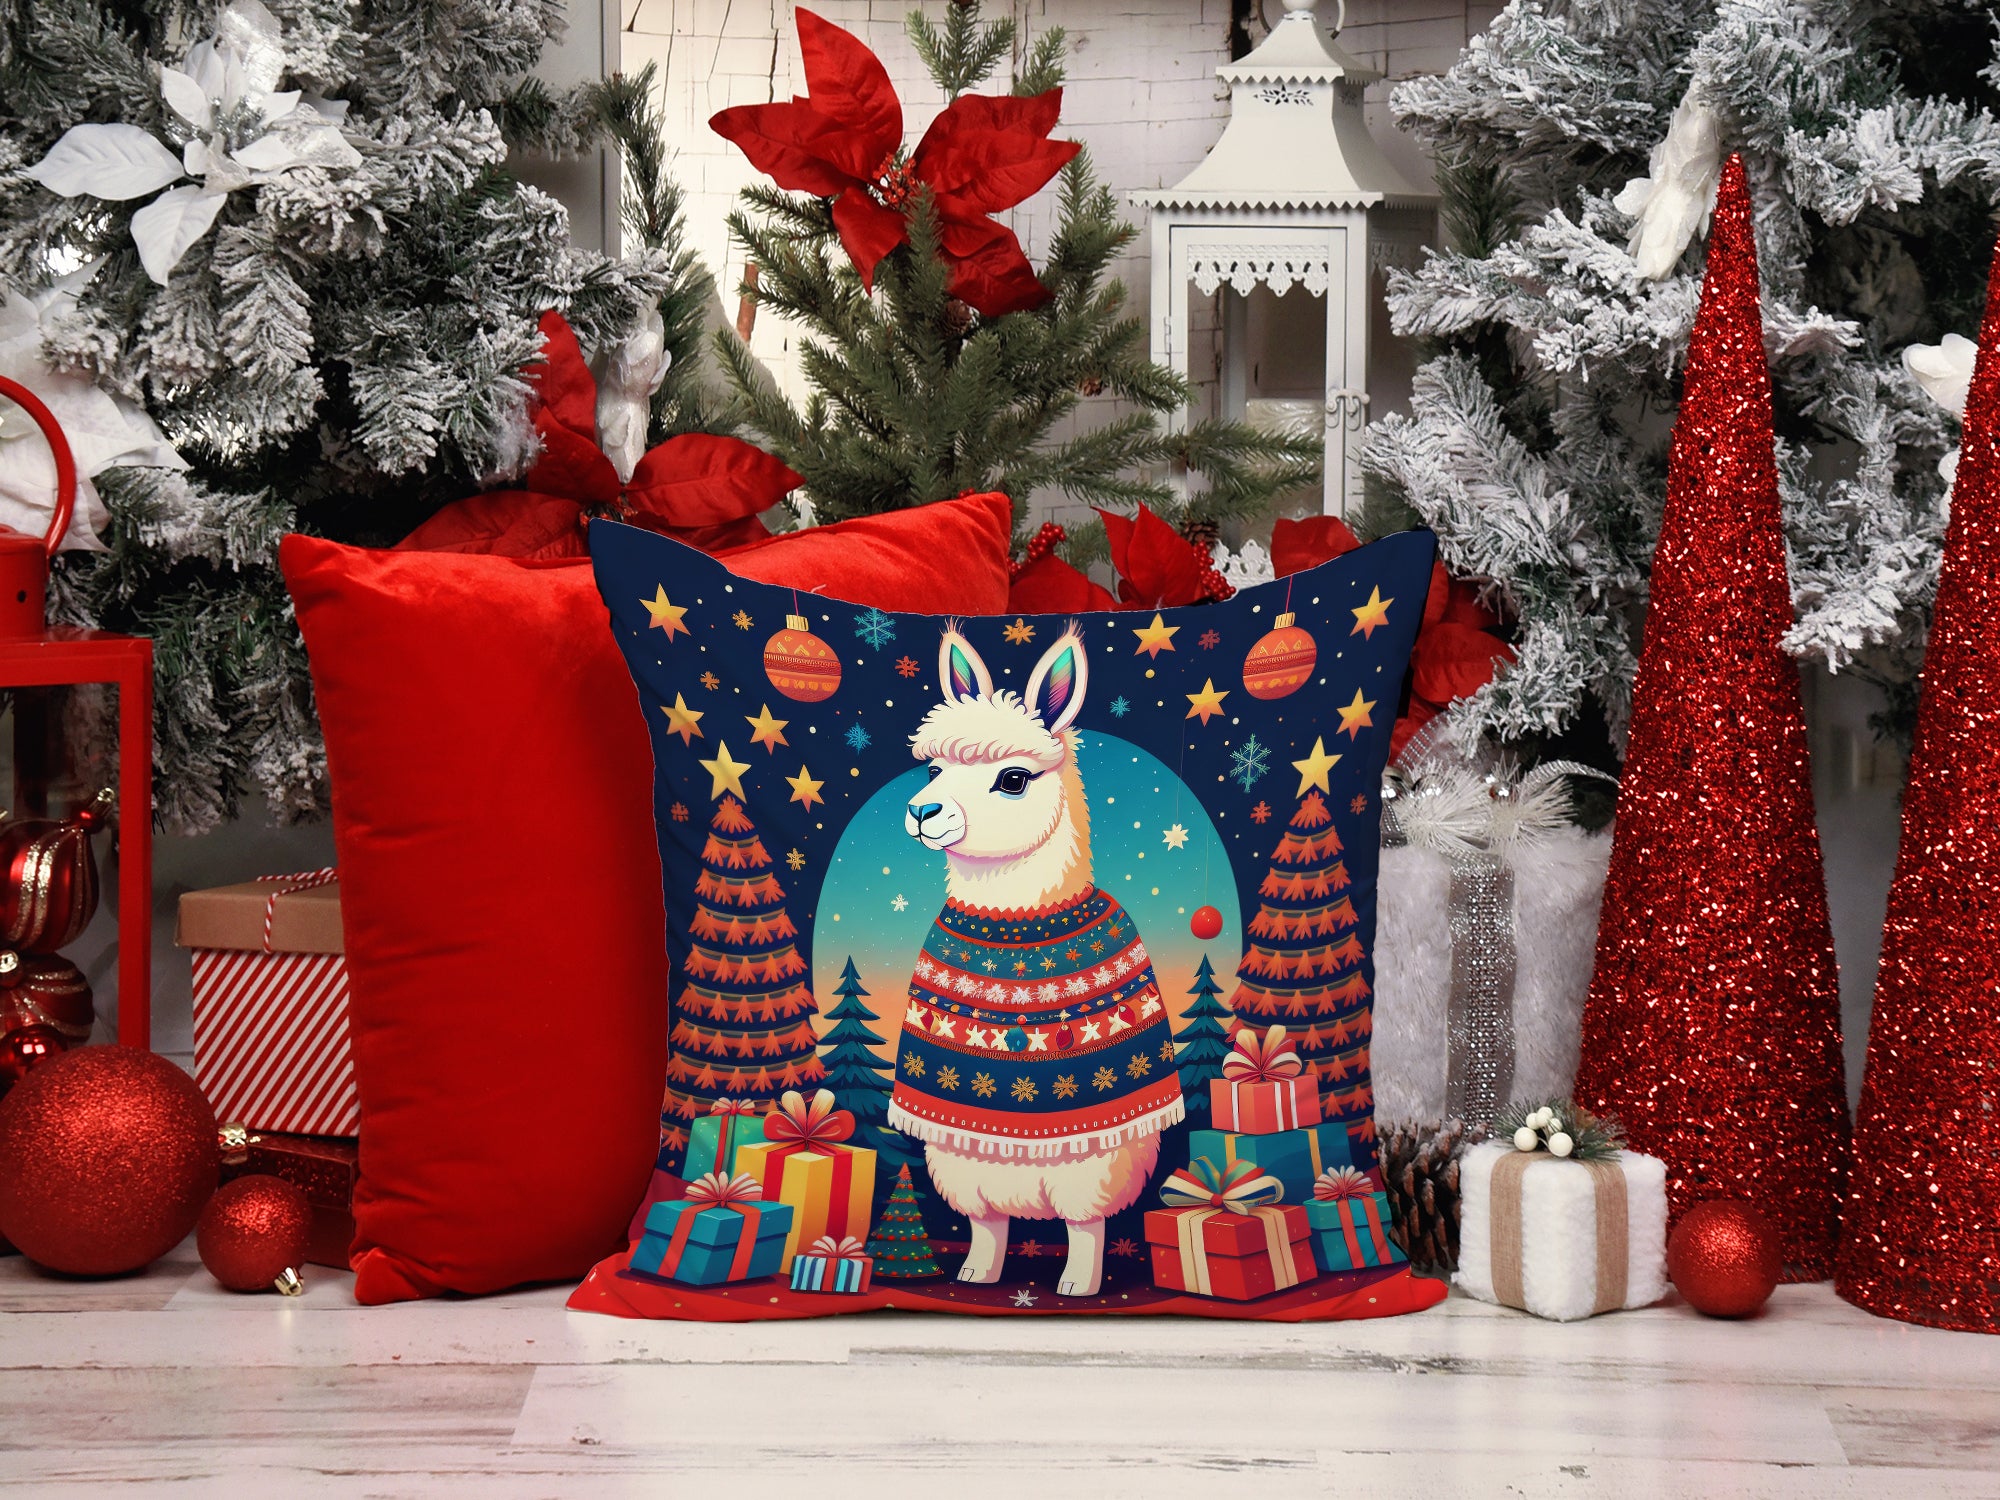 Llama Christmas Fabric Decorative Pillow